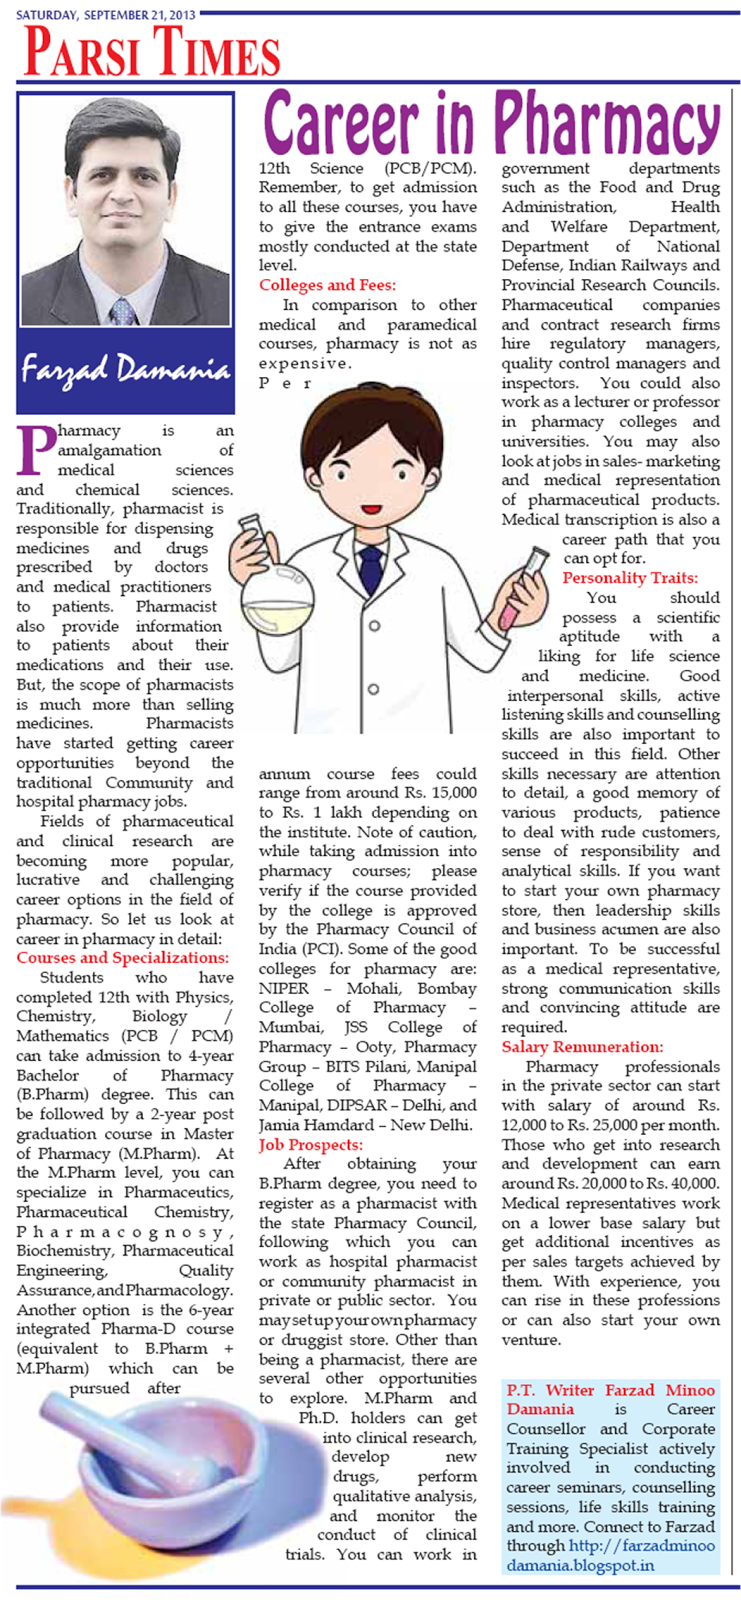 career-in-pharmacy-article-by-farzad-minoo-damania-parsi-times-weekly-newspaper-career